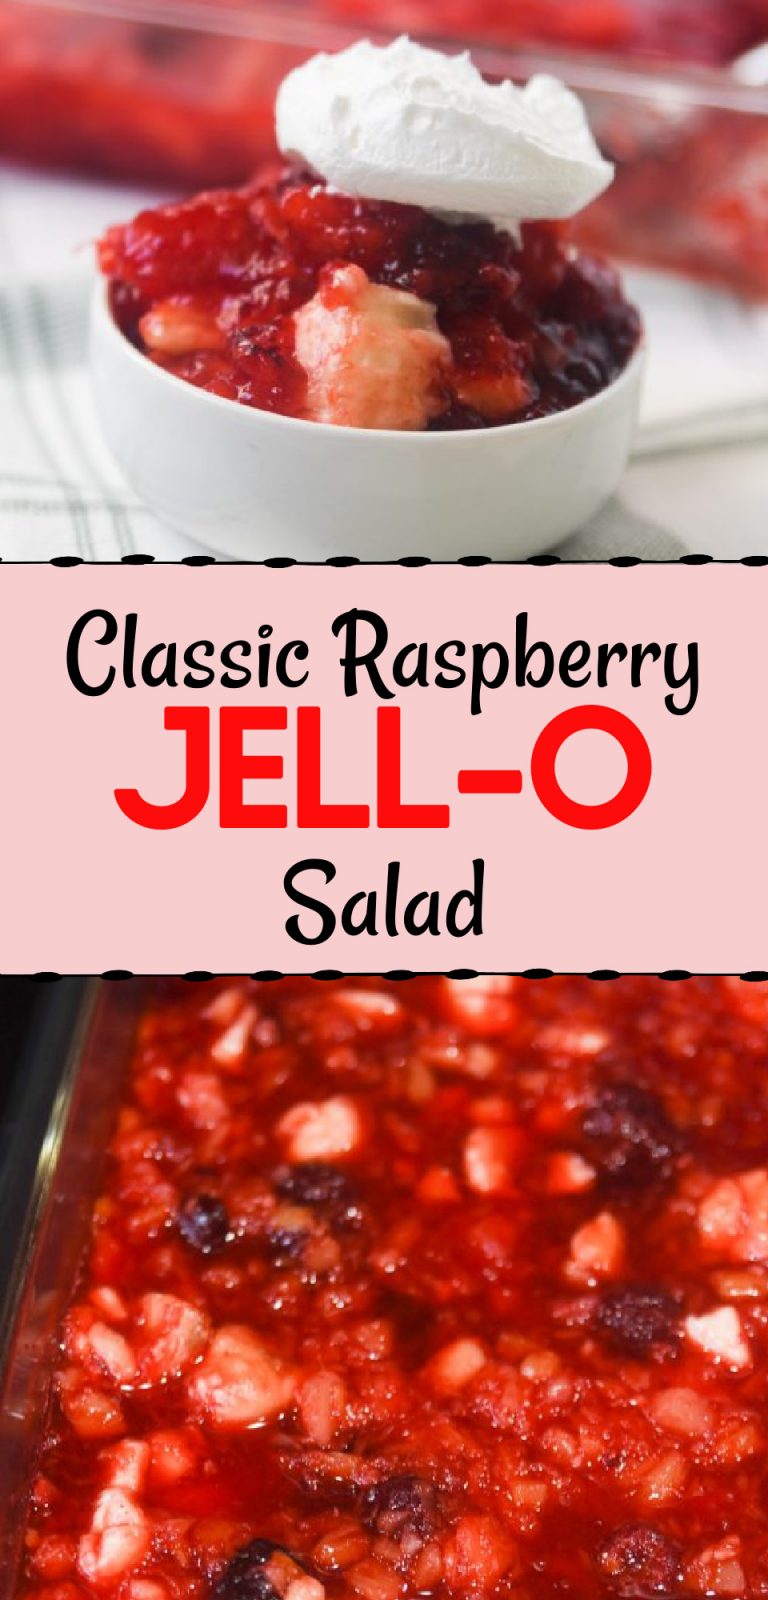 Classic Raspberry Jello Salad Dessert Recipe